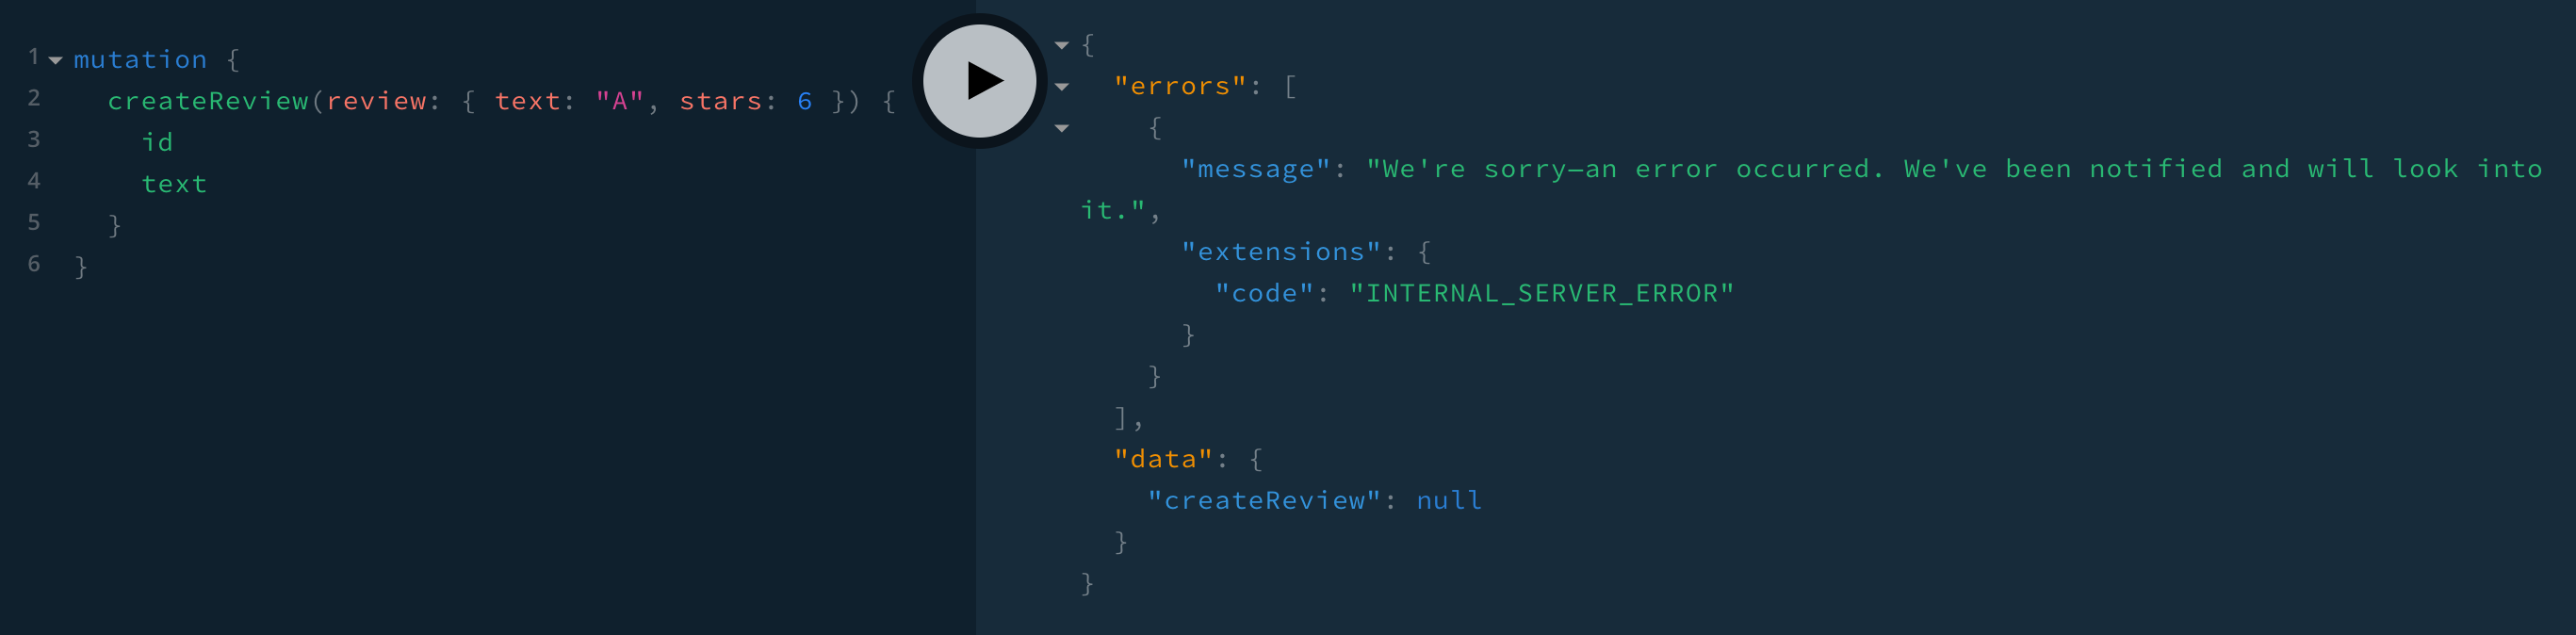 error with code INTERNAL_SERVER_ERROR